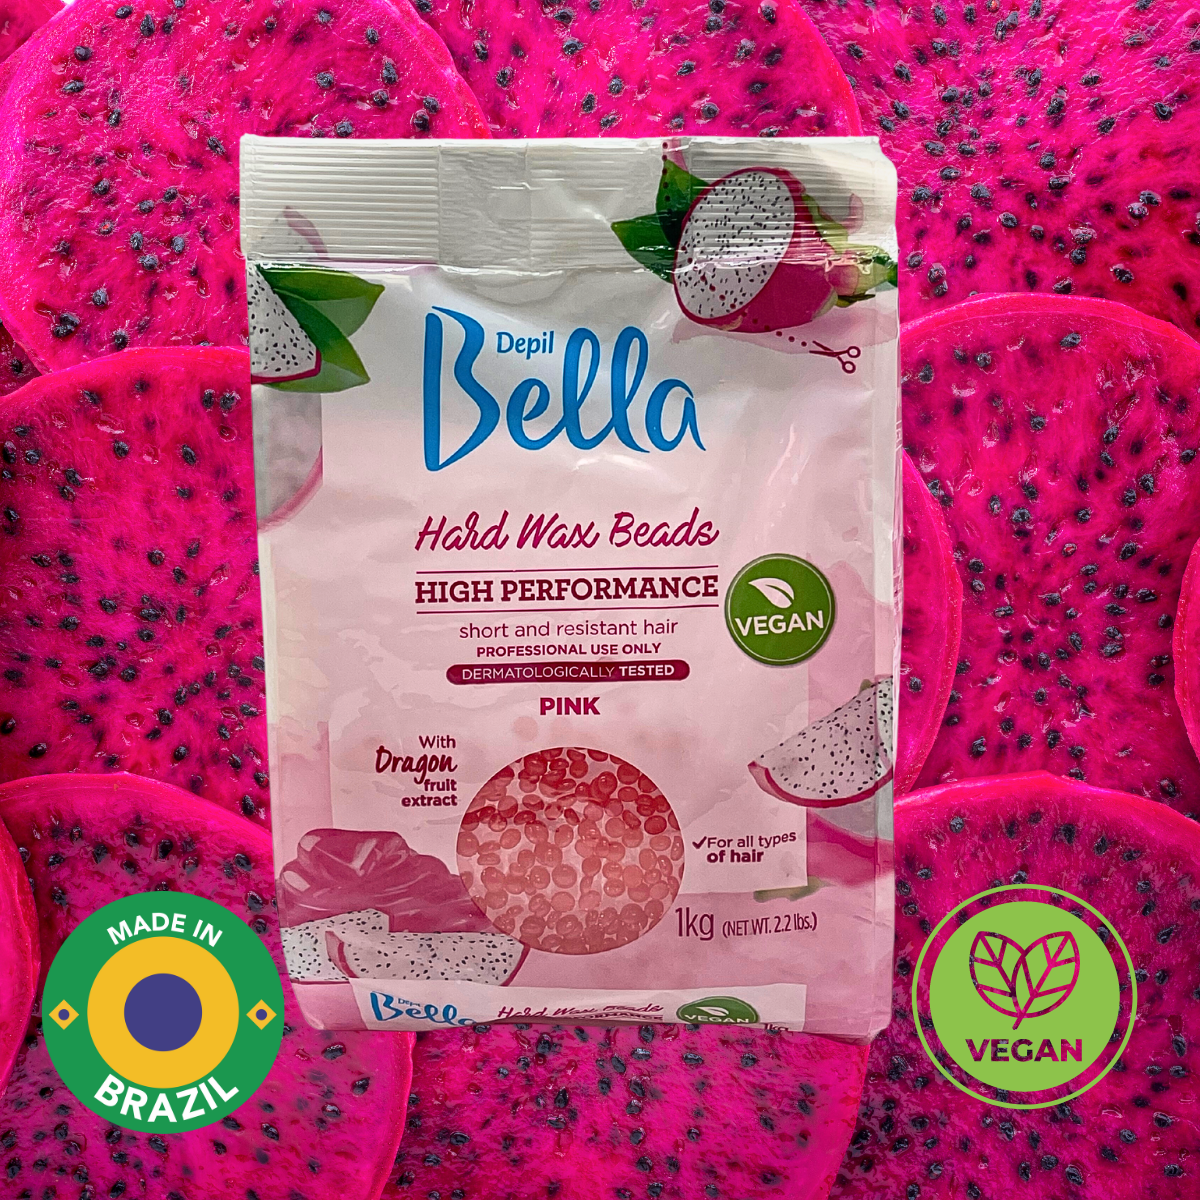 Depil Bella Pink Pitaya Confetti Hard Wax Beads - High-Performance Hair Removal | Vegan 2.2 lbs - Buy professional cosmetics dedicated to hair removal